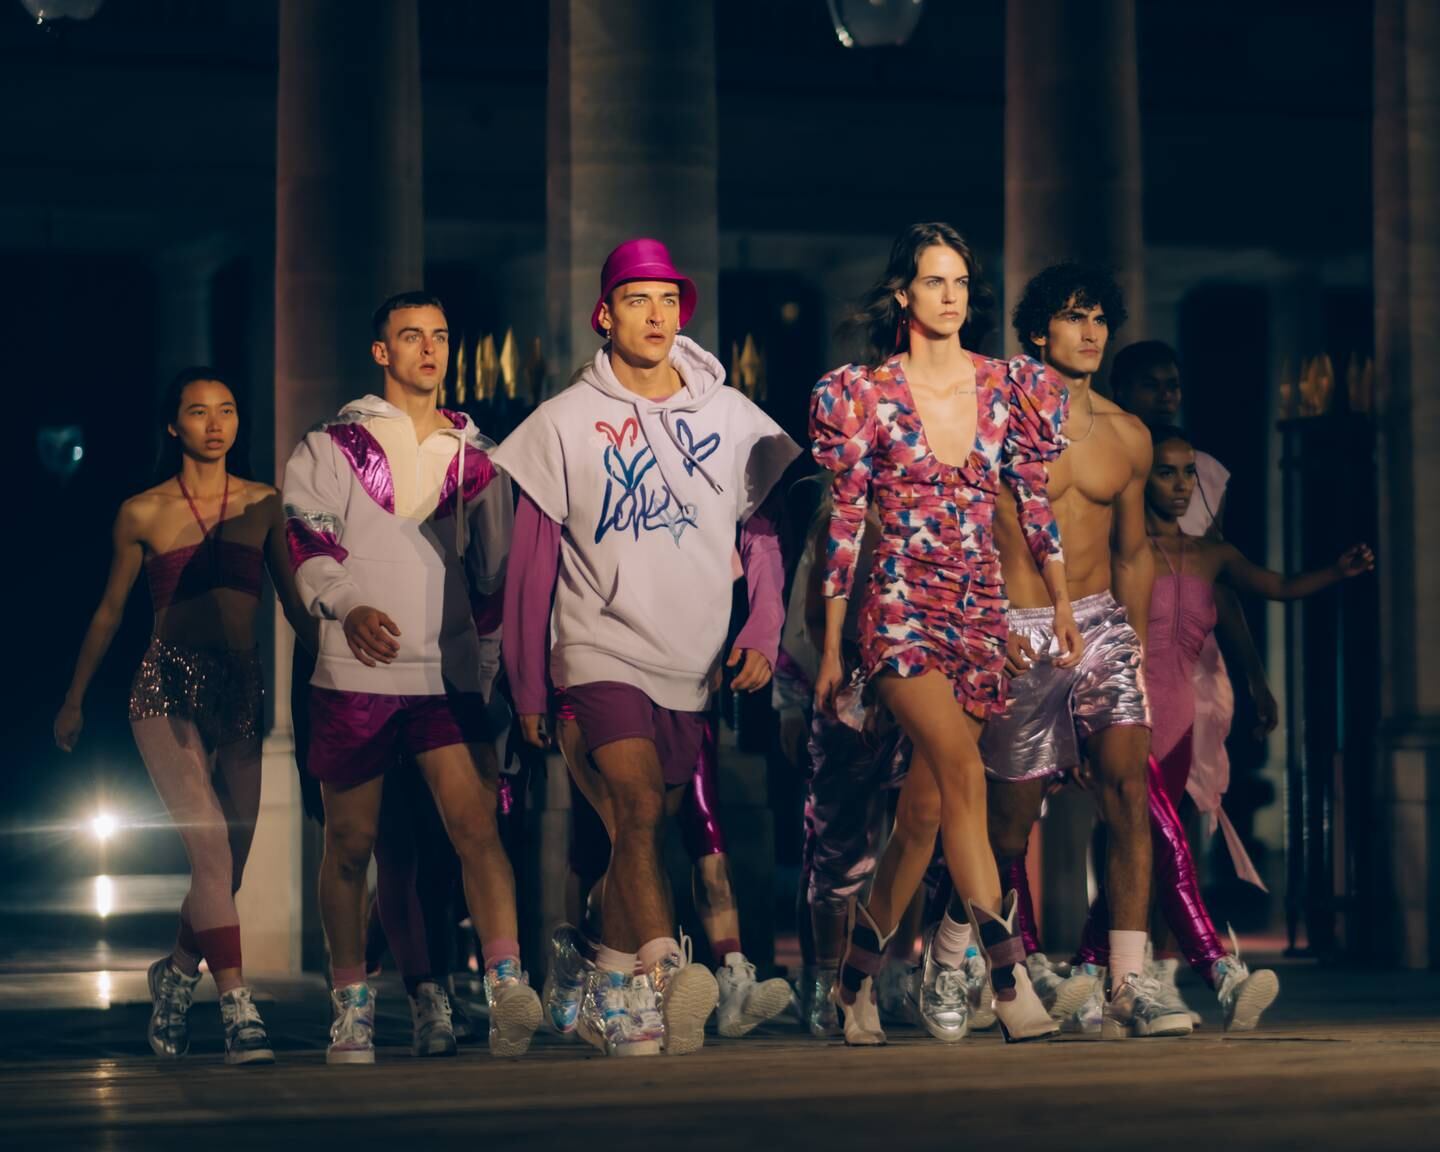 Models walk the runway alongside dancers from France's "La Horde" dance troupe in October 2020.